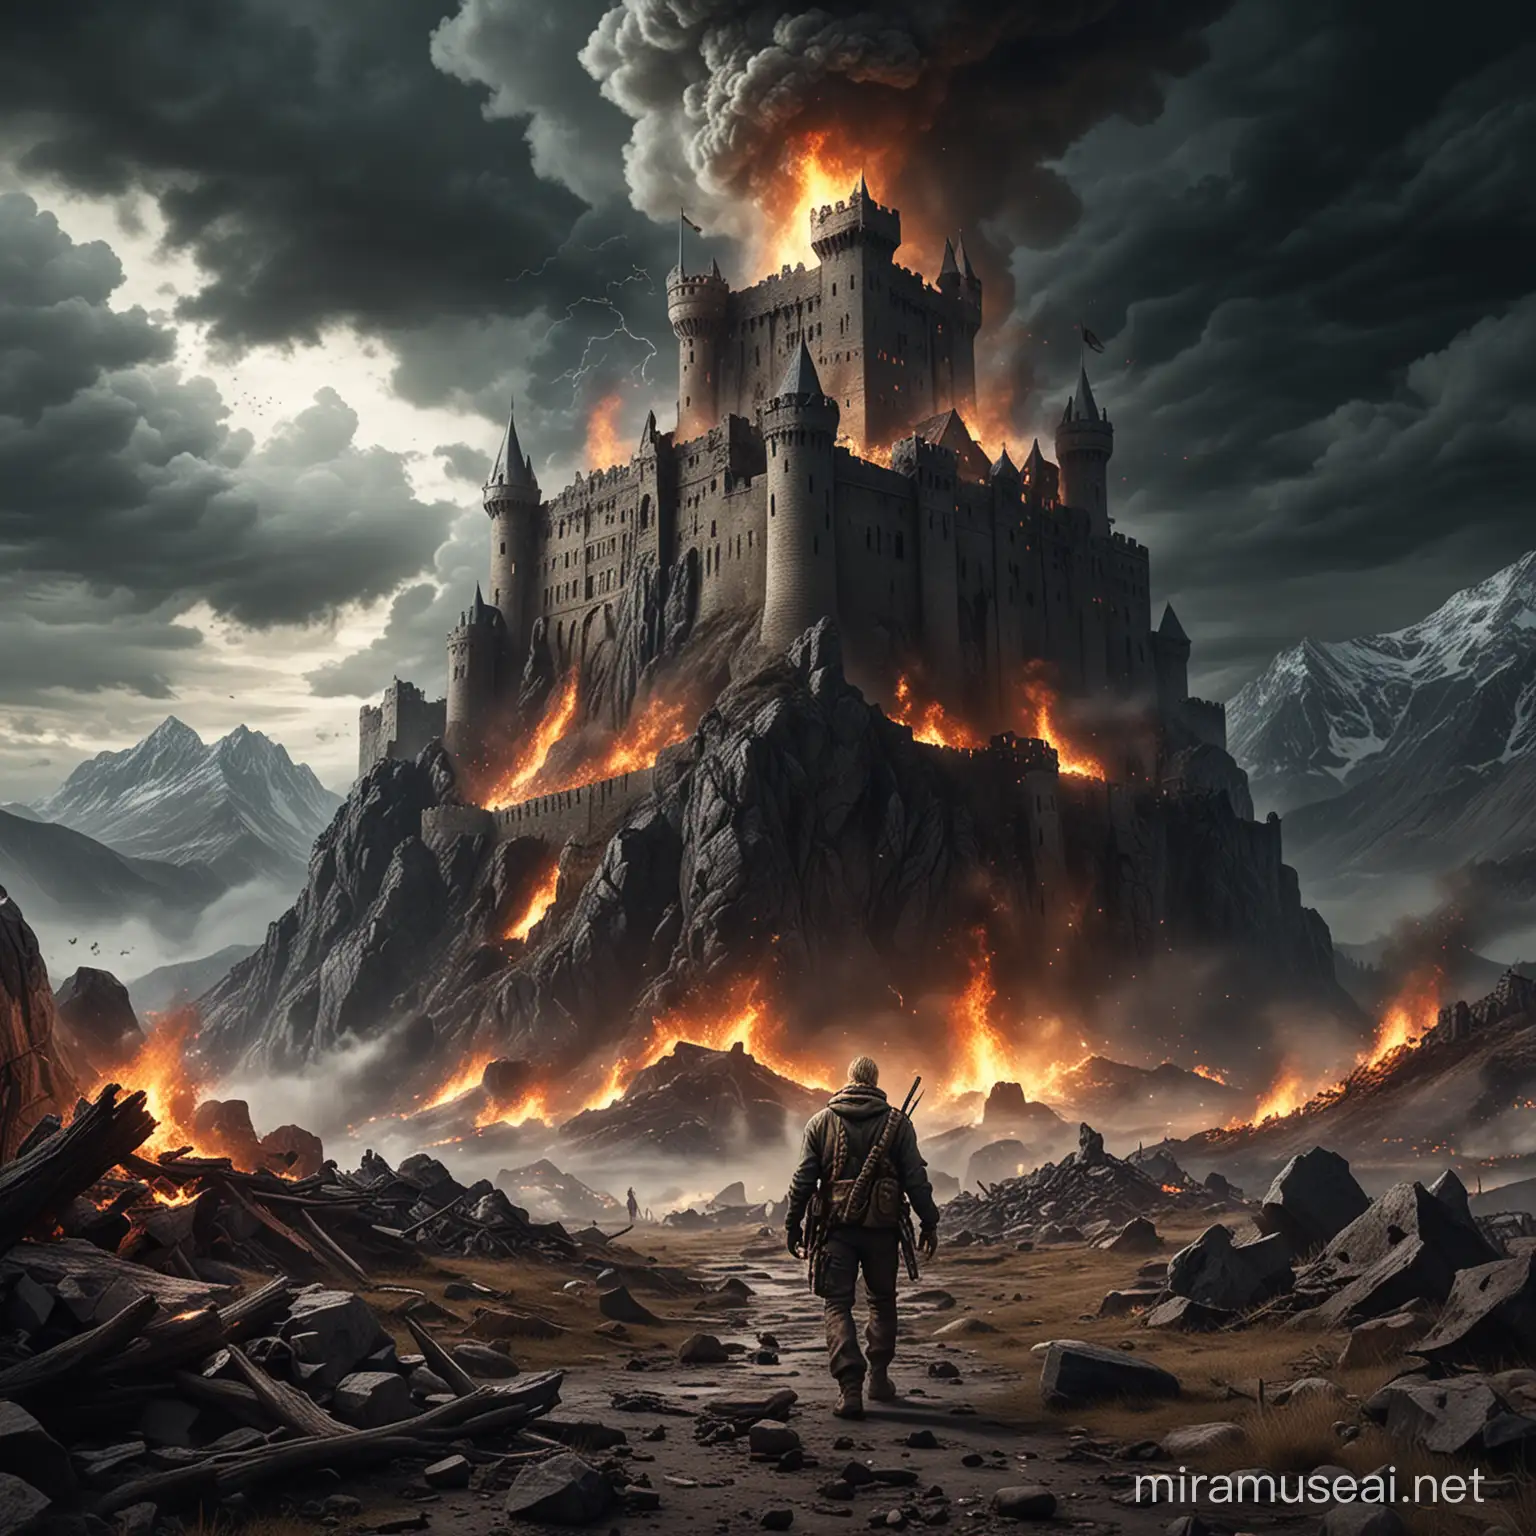 Blond Man Surviving Chaos Castle Amidst Fire and Storm